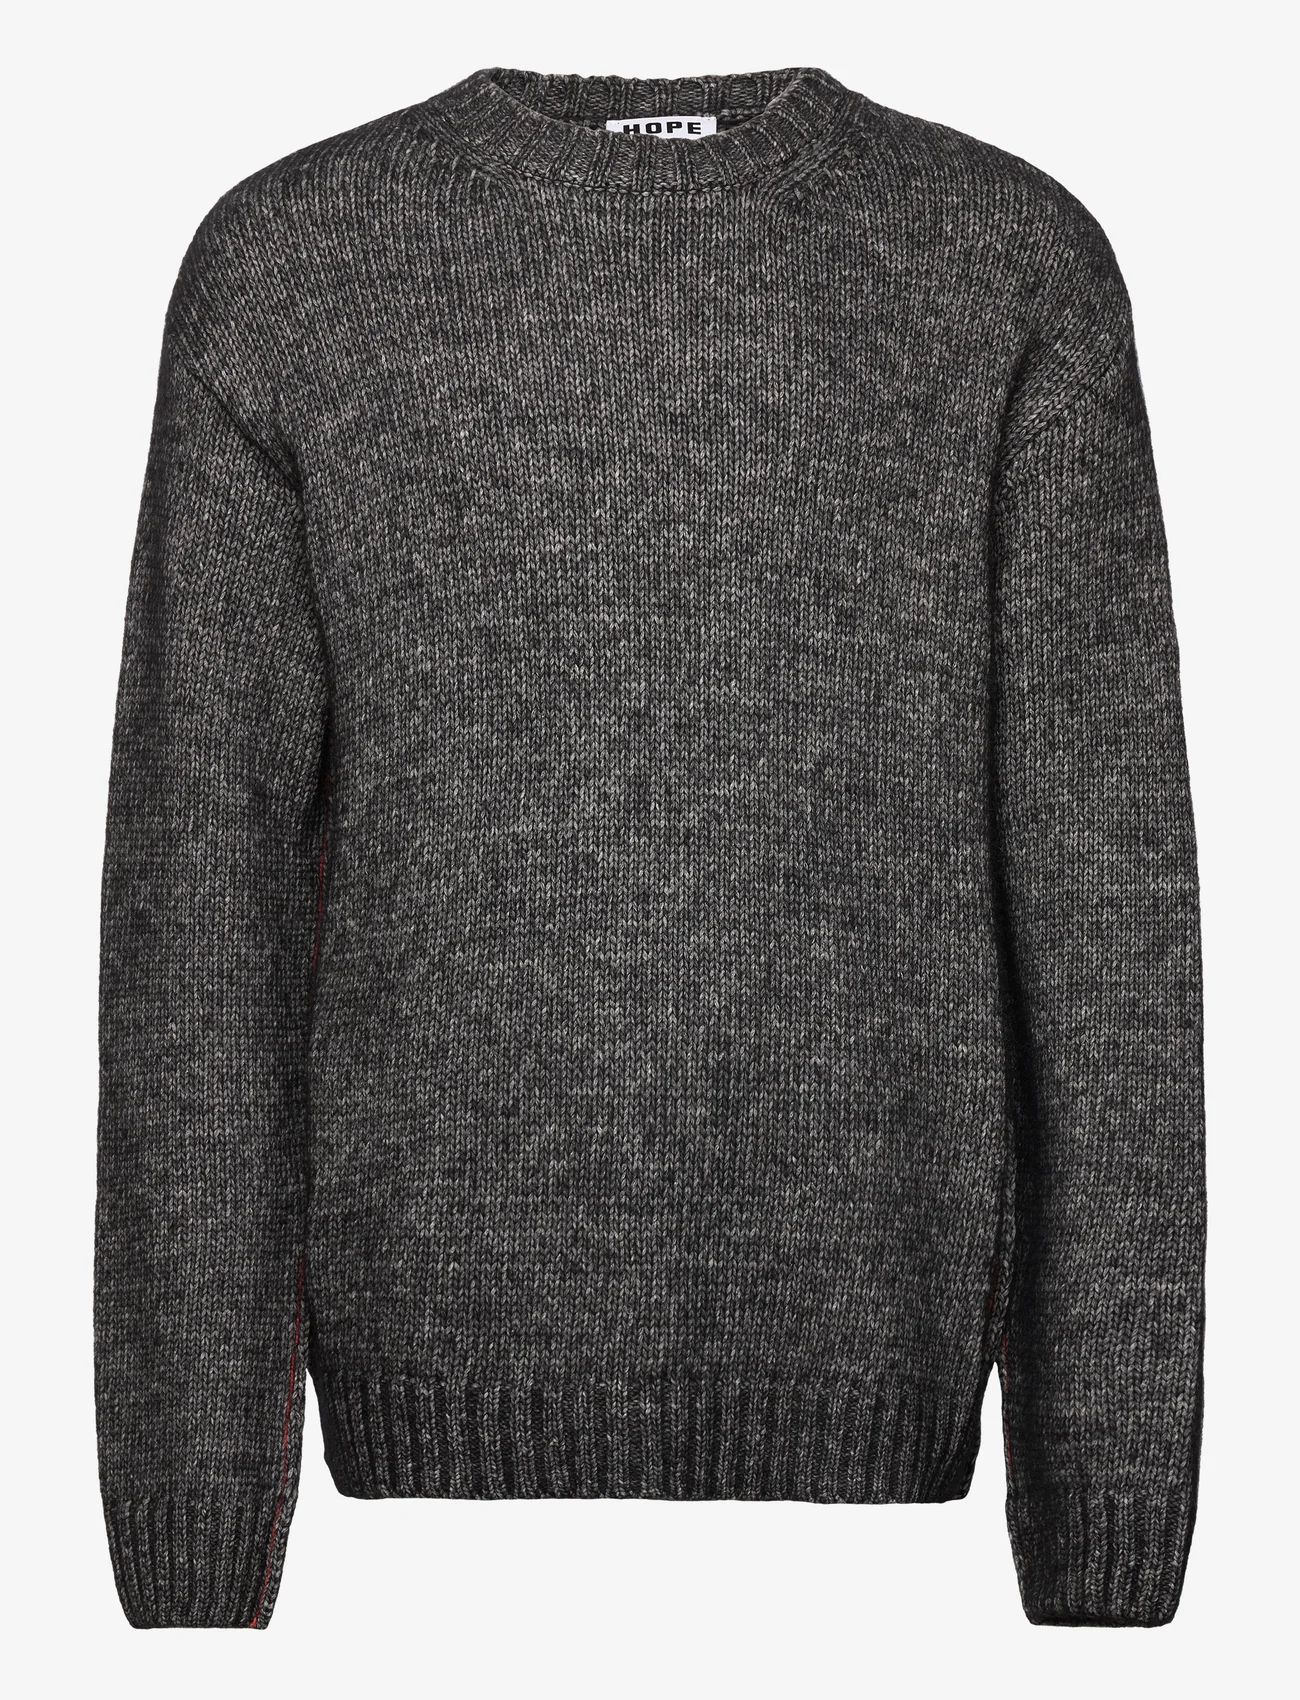 Hope - Oversized Wool Sweater - rundhals - black melange - 0